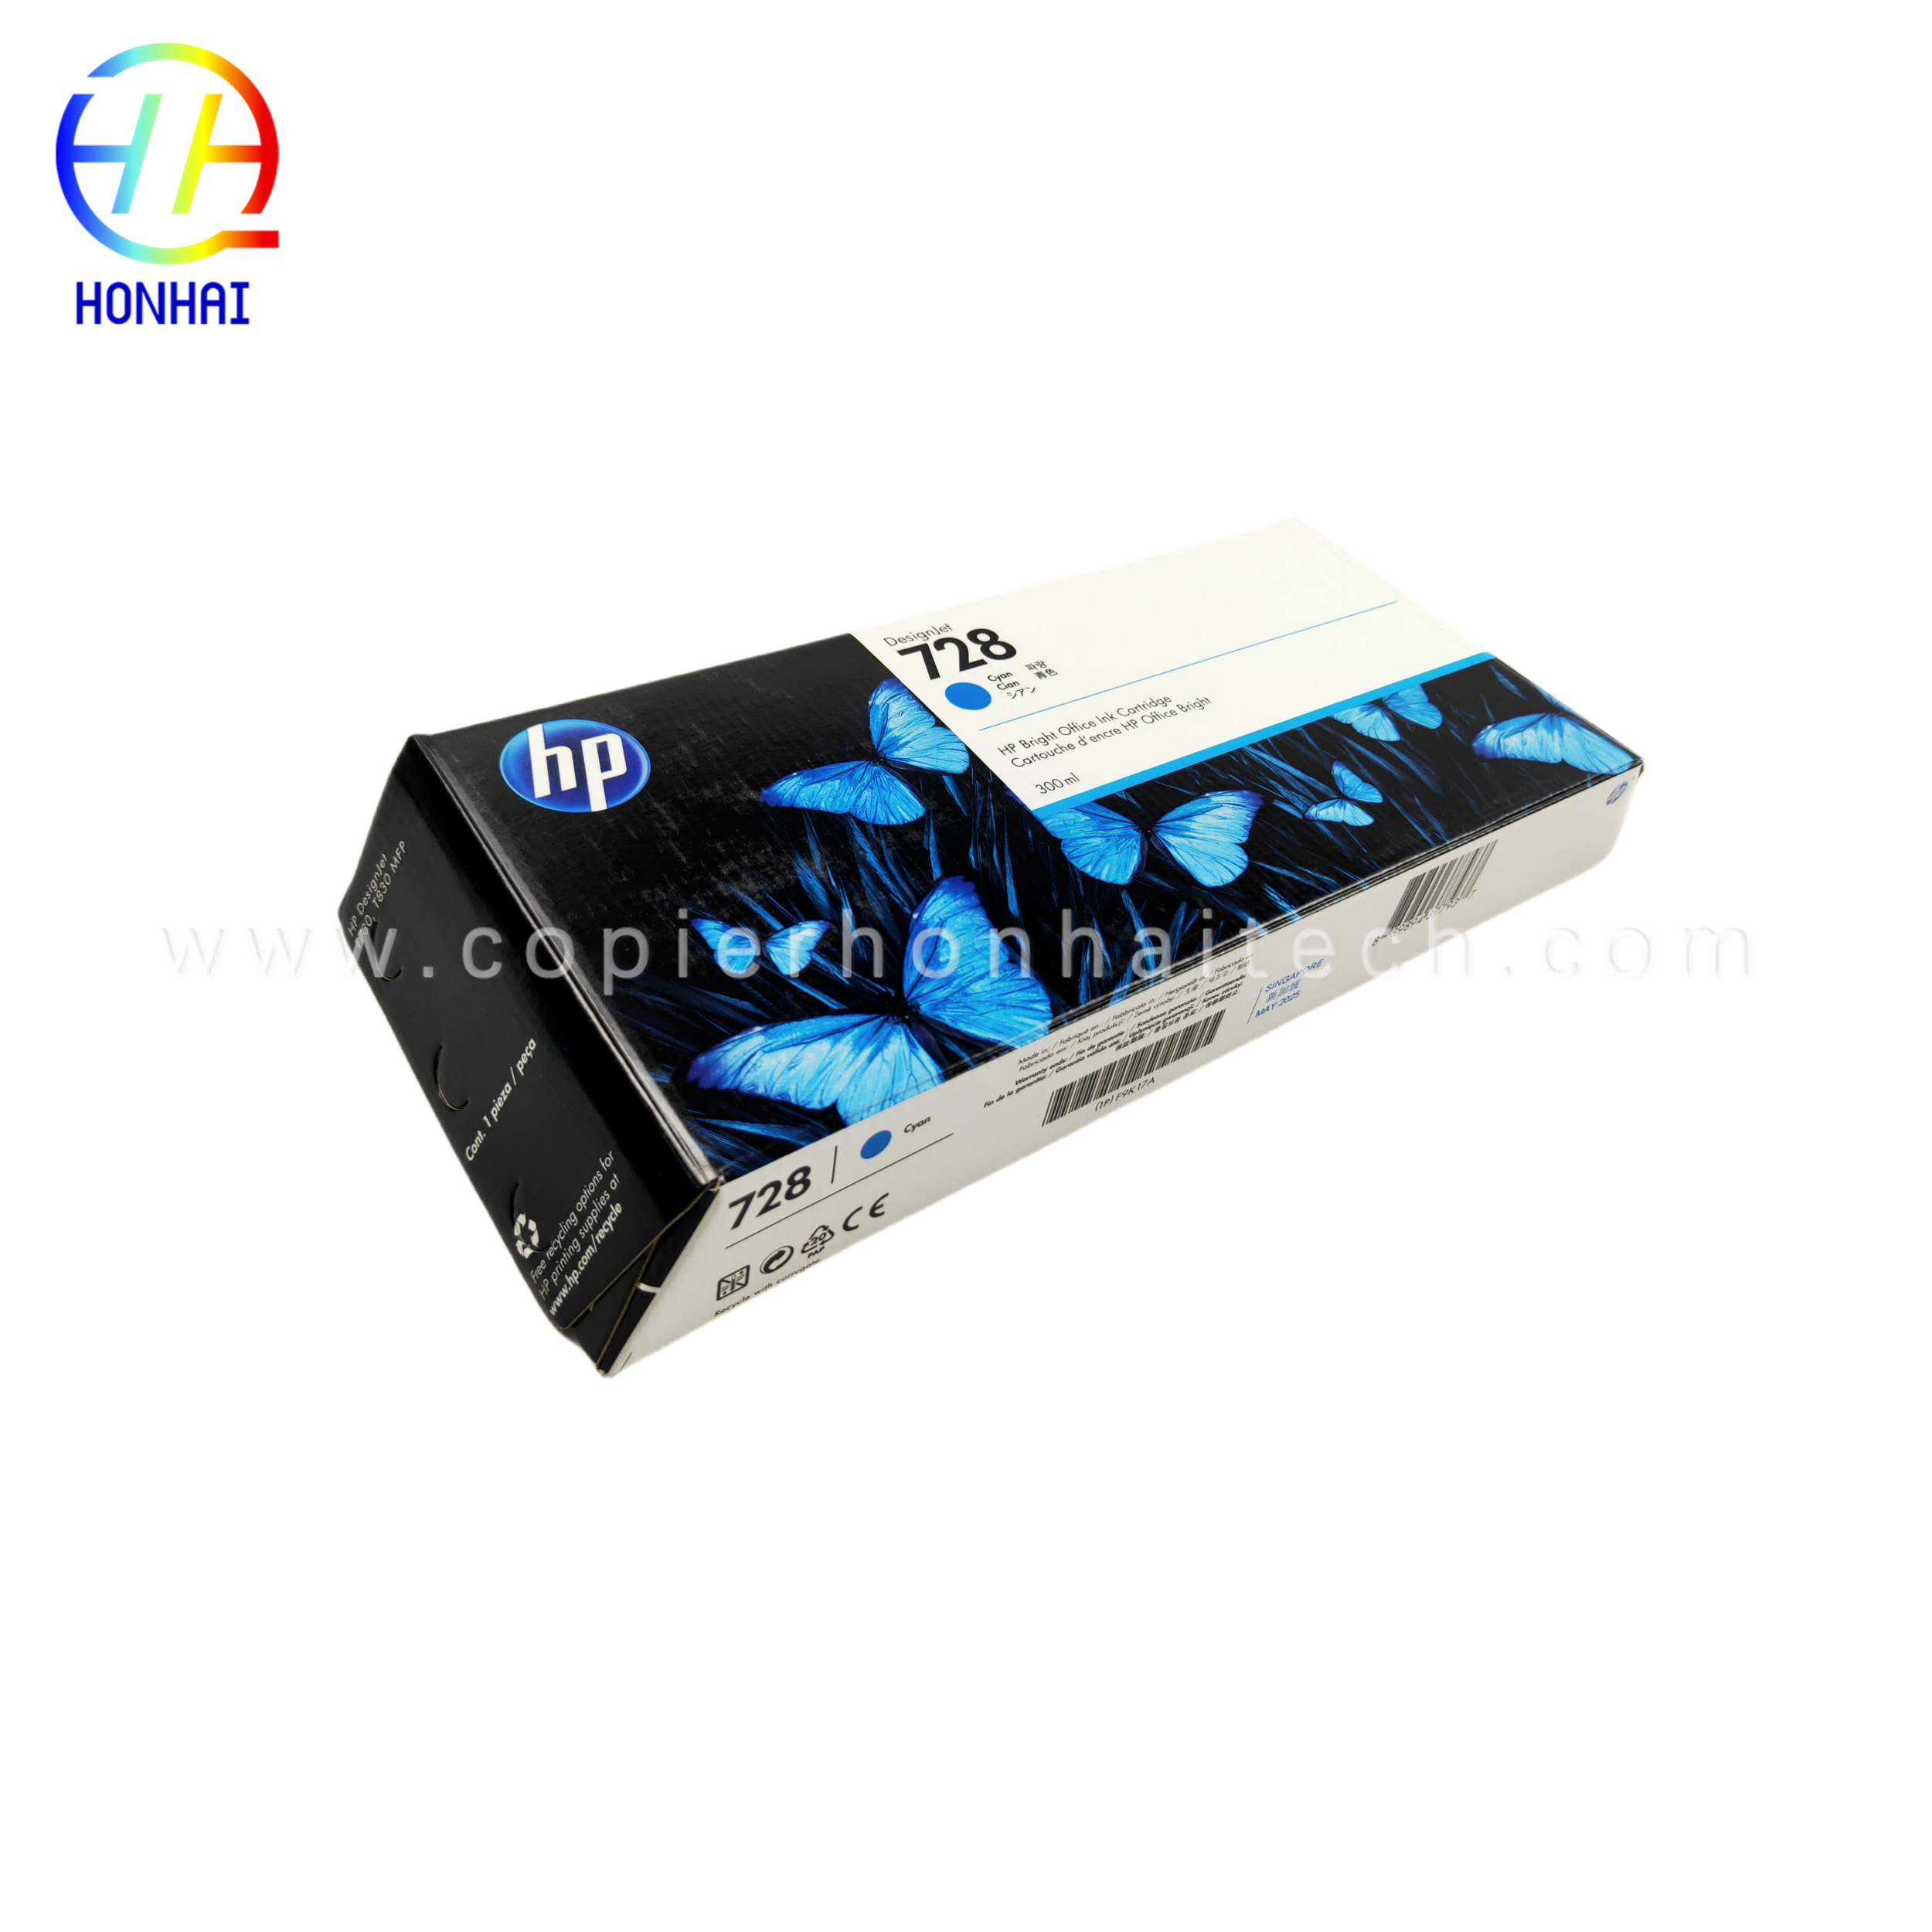 https://www.copierhonhaitech.com/original-new-ink-cartridge-cyan-for-hp-designjet-t730-and-t830-large-format-plotter-printers-and-hp-729-designjet-printhead- 728-f9k17a-прадукт/